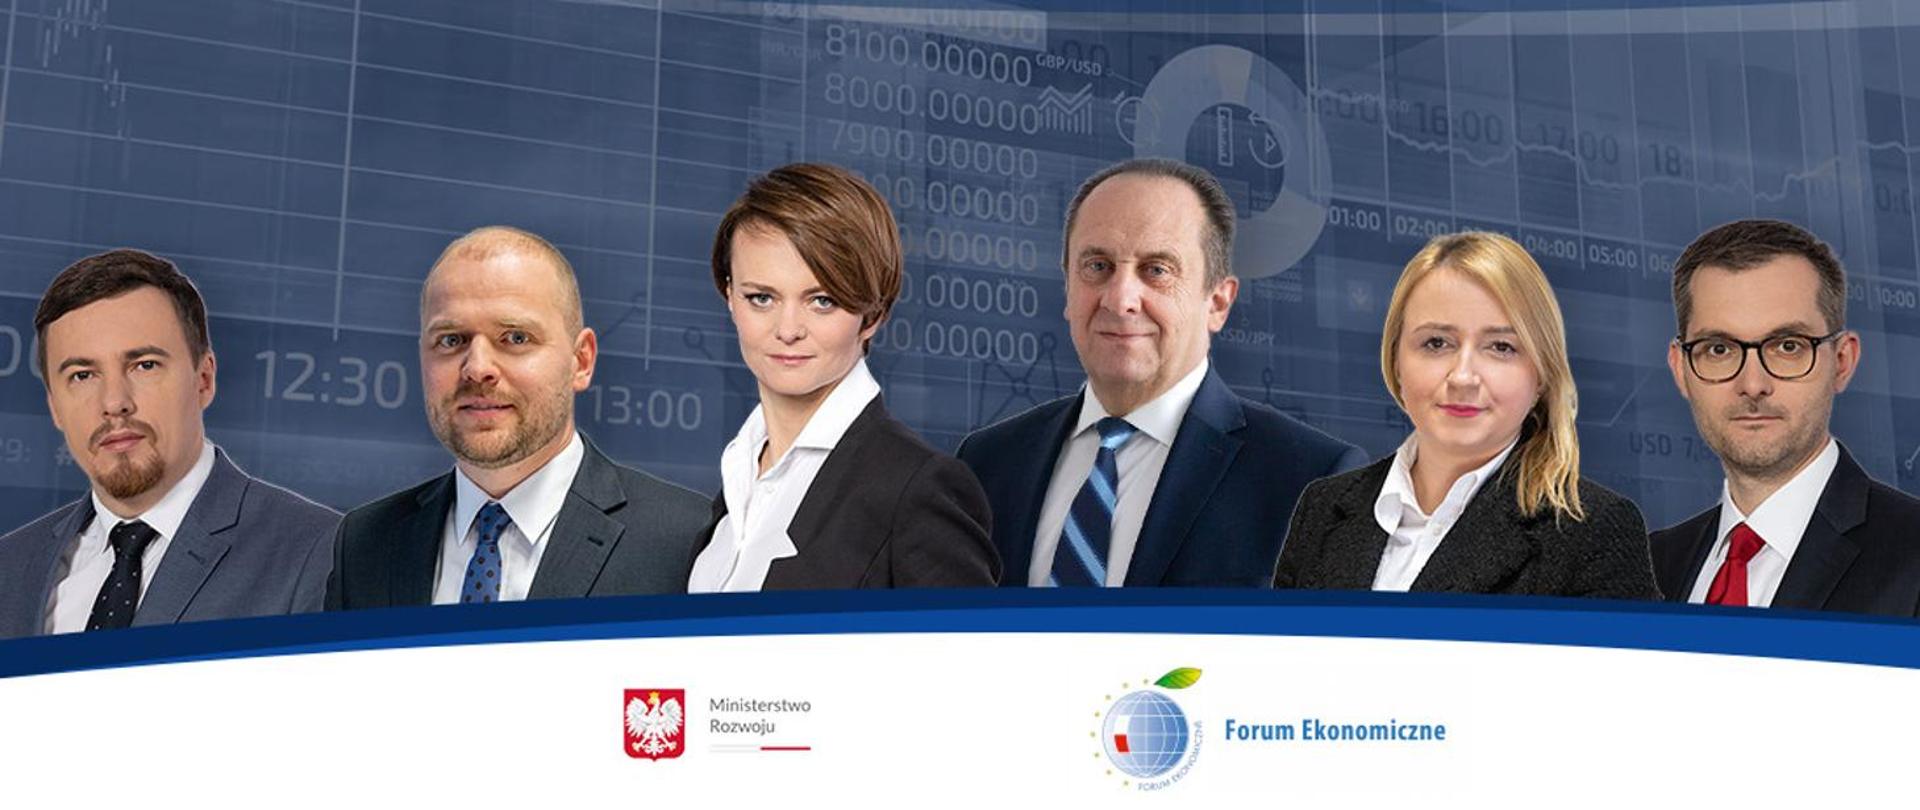 Deputy Prime Minister, Minister of Econimic Development Jadwiga Emilewicz, and Deputy Ministers of Economic Development